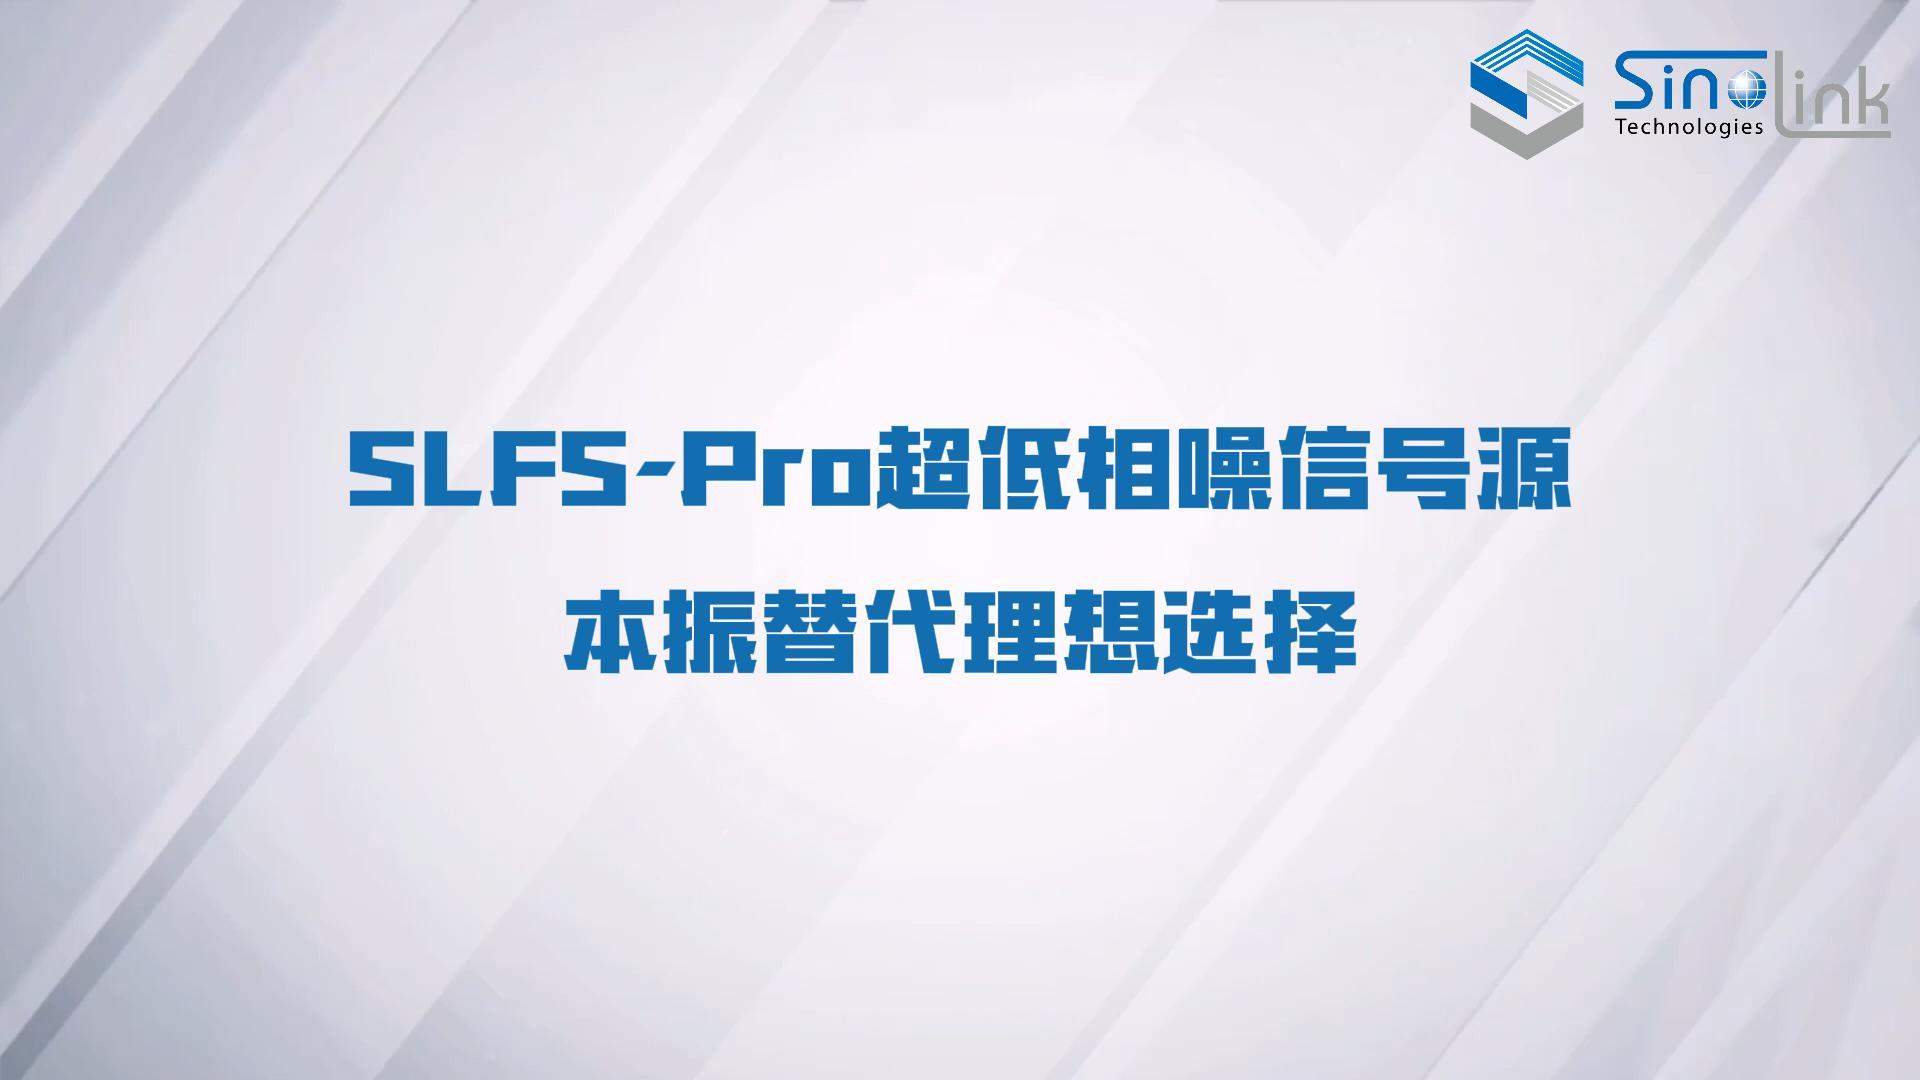 SLFS-Pro信号源-本振替代的理想选择，超低相位噪声、超纯净频谱、输出高质量信号#信号源

 